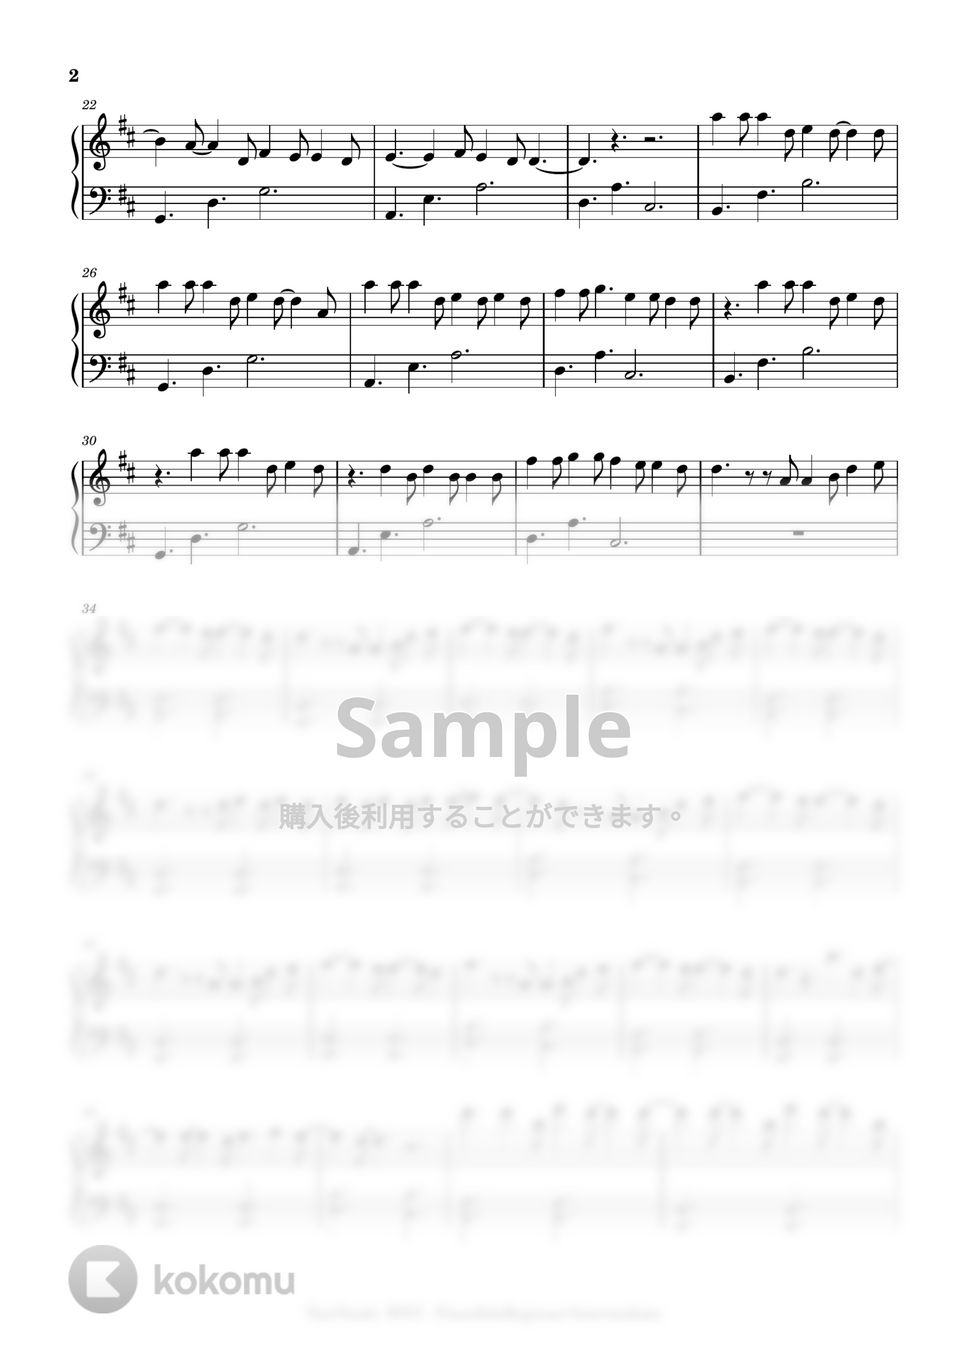 Tani Yuuki - W/X/Y (beginner to intermediate, piano) by Mopianic